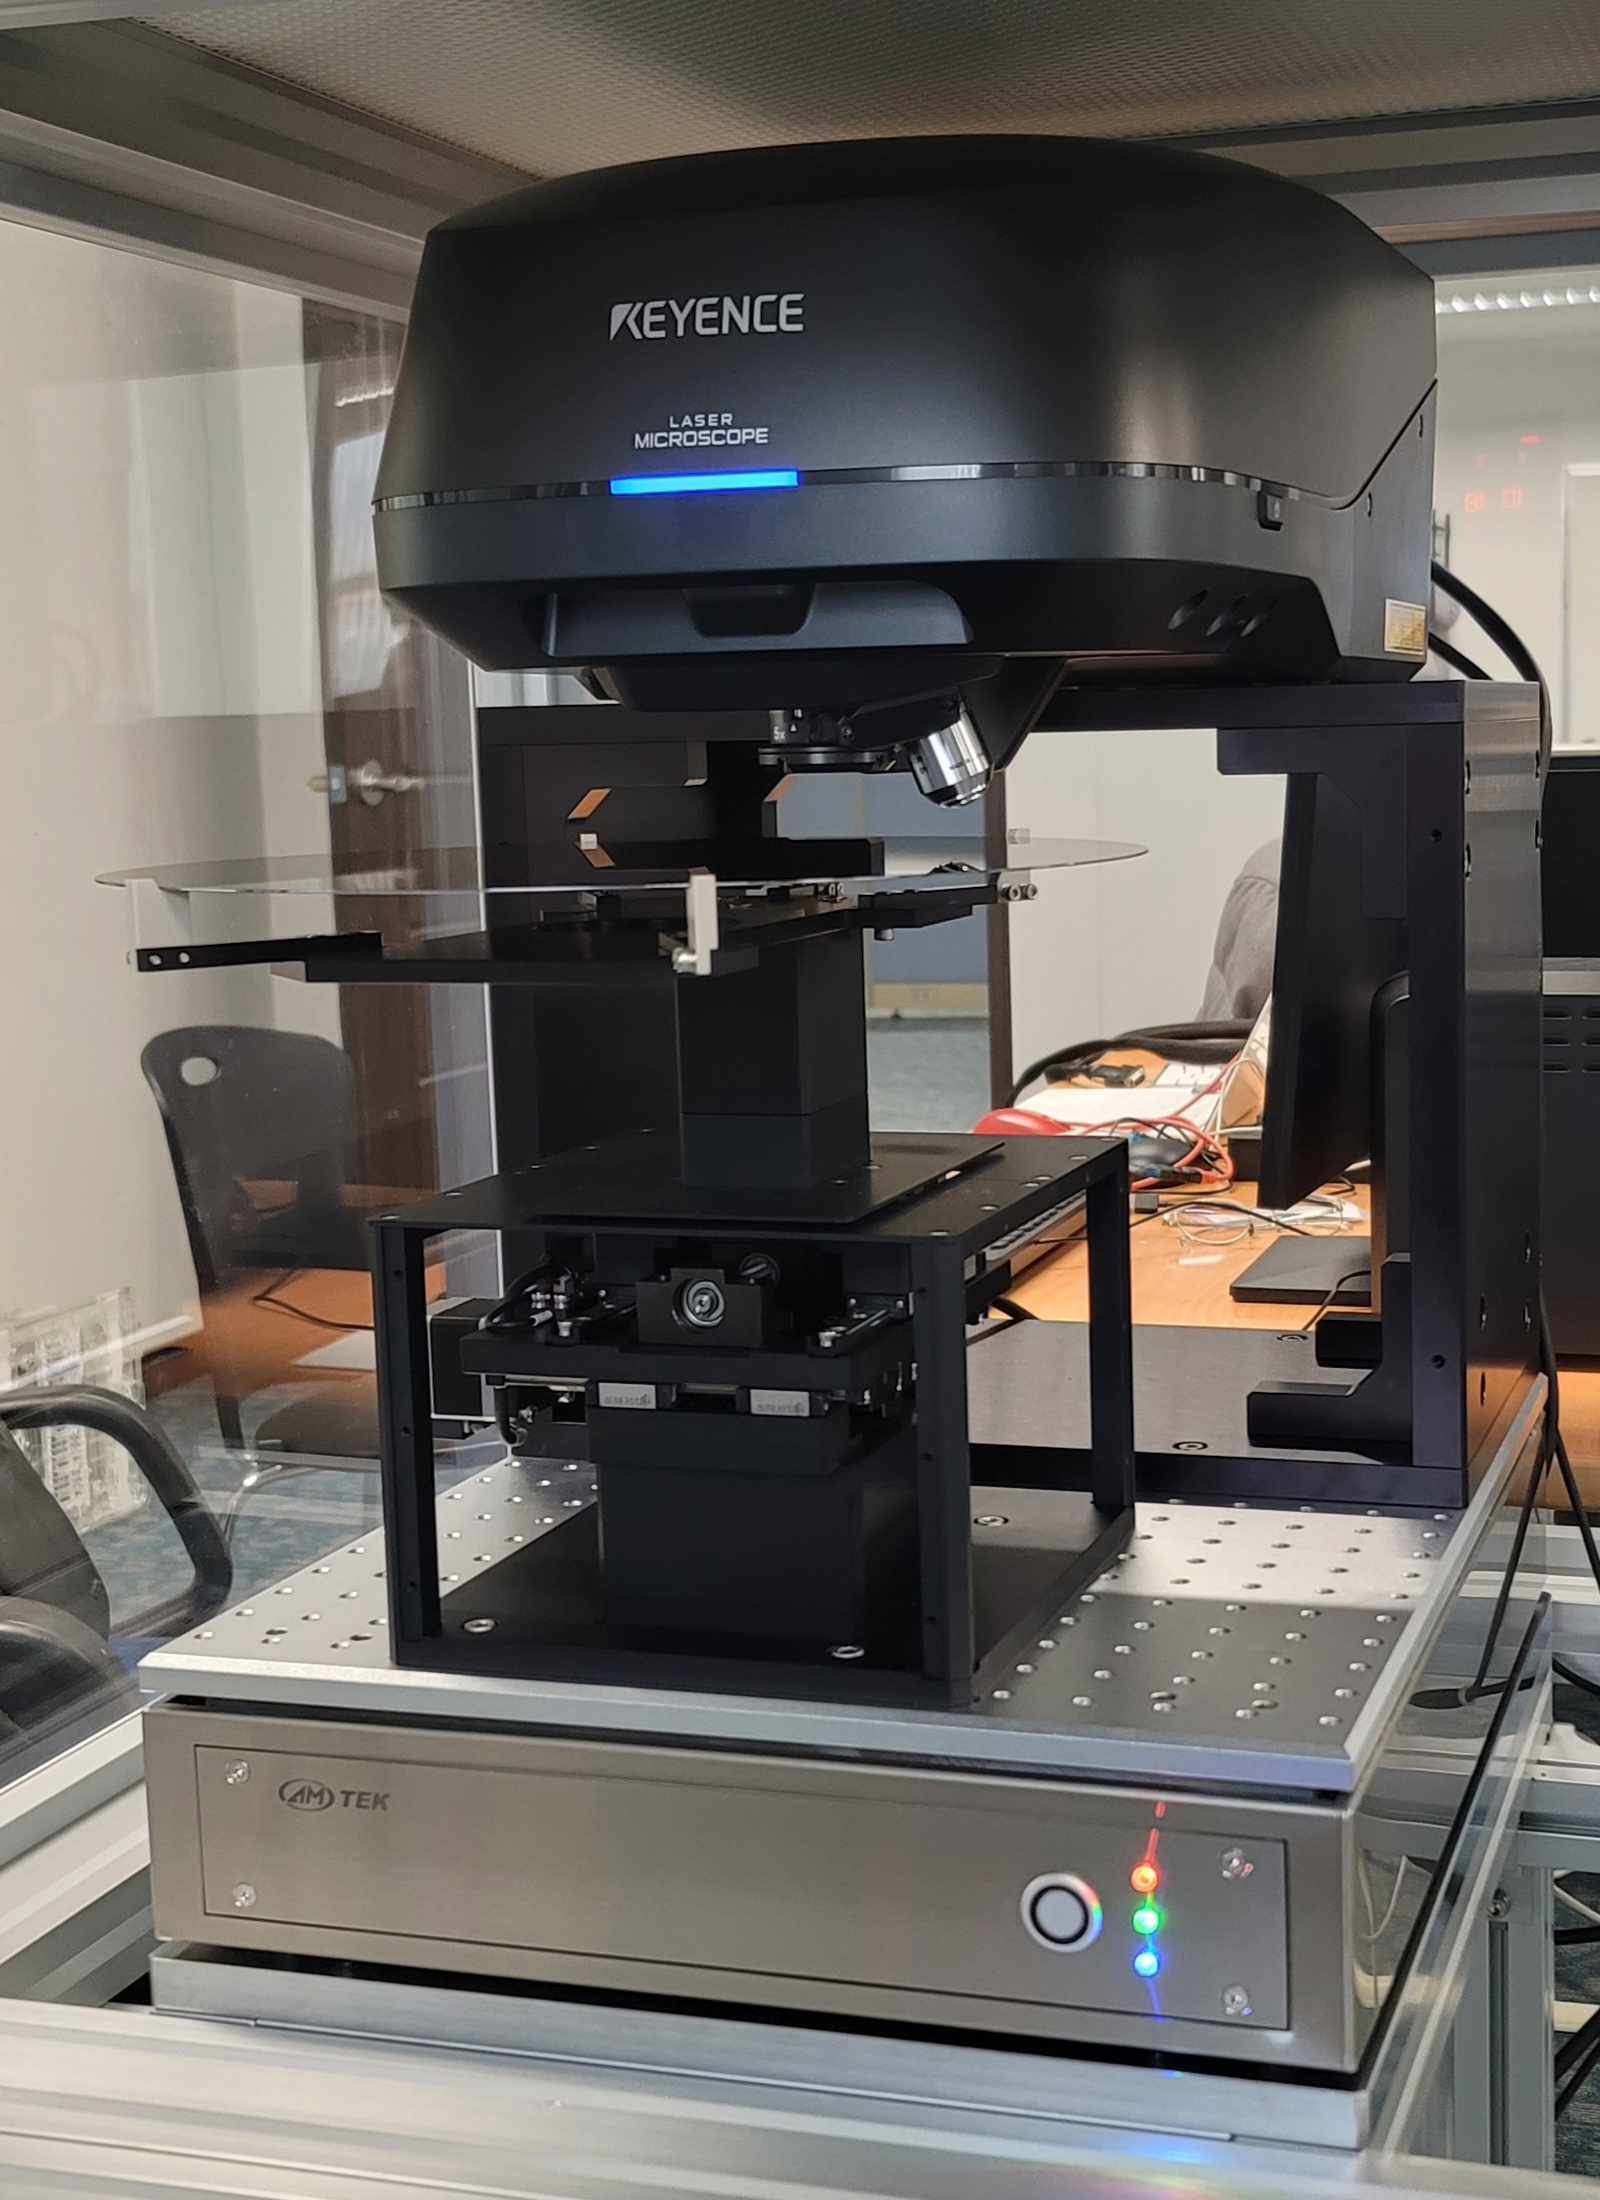 AMT-045 for KEYENCE Laser Microscope